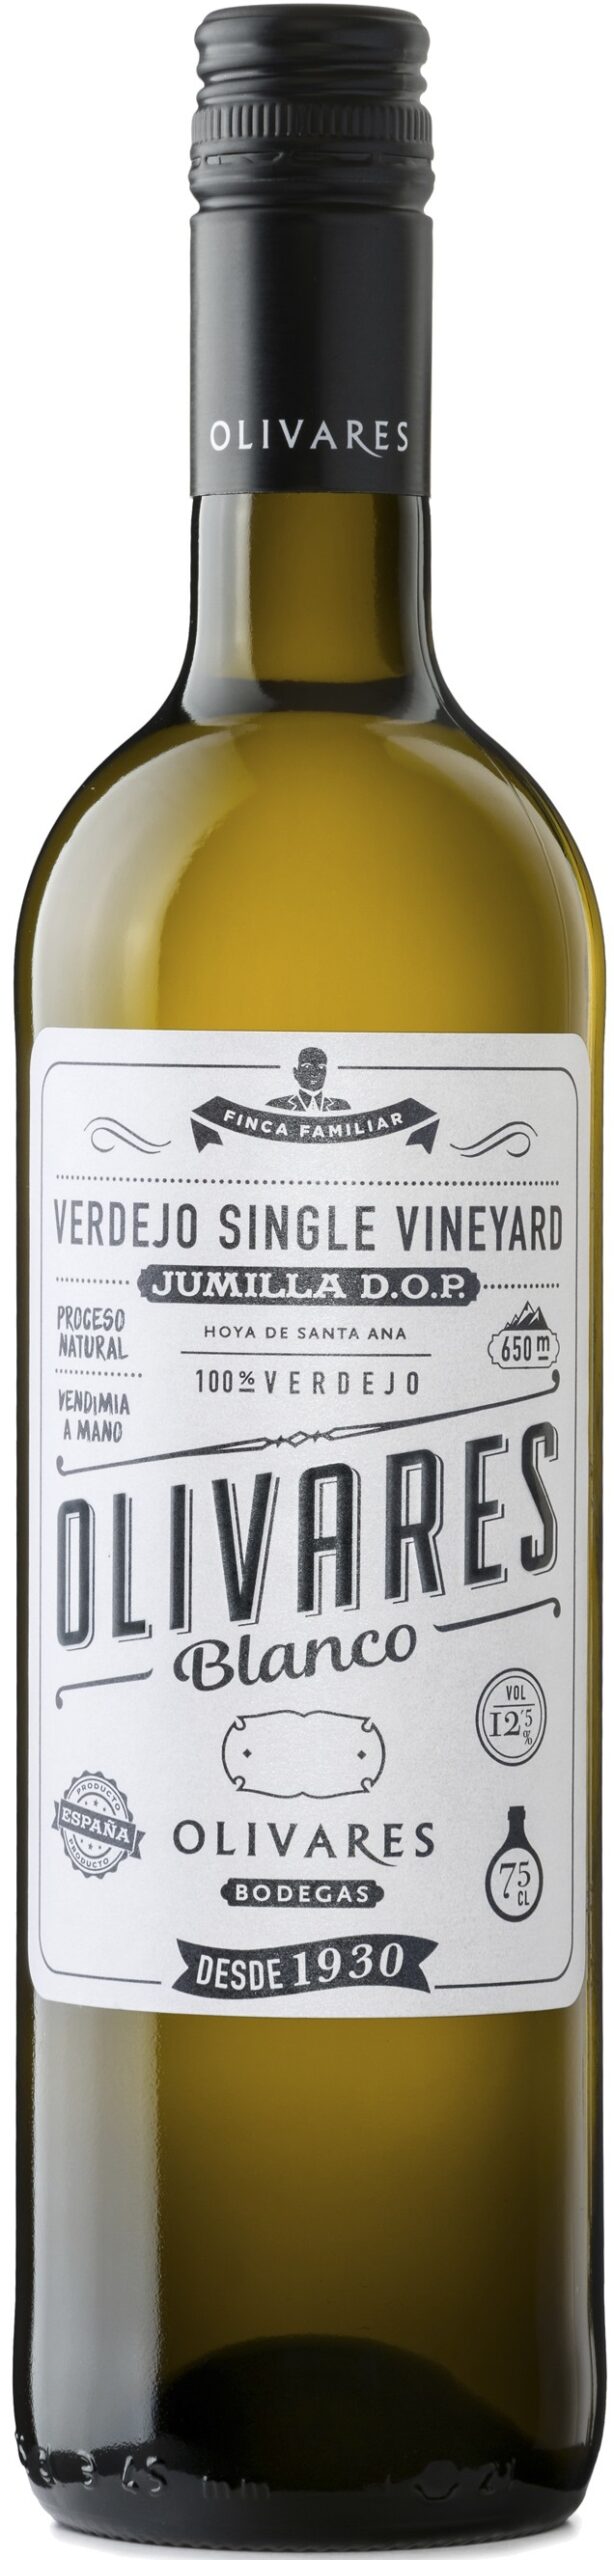 South World Wines vins étrangers Espagne Olivares blanco Verdejo